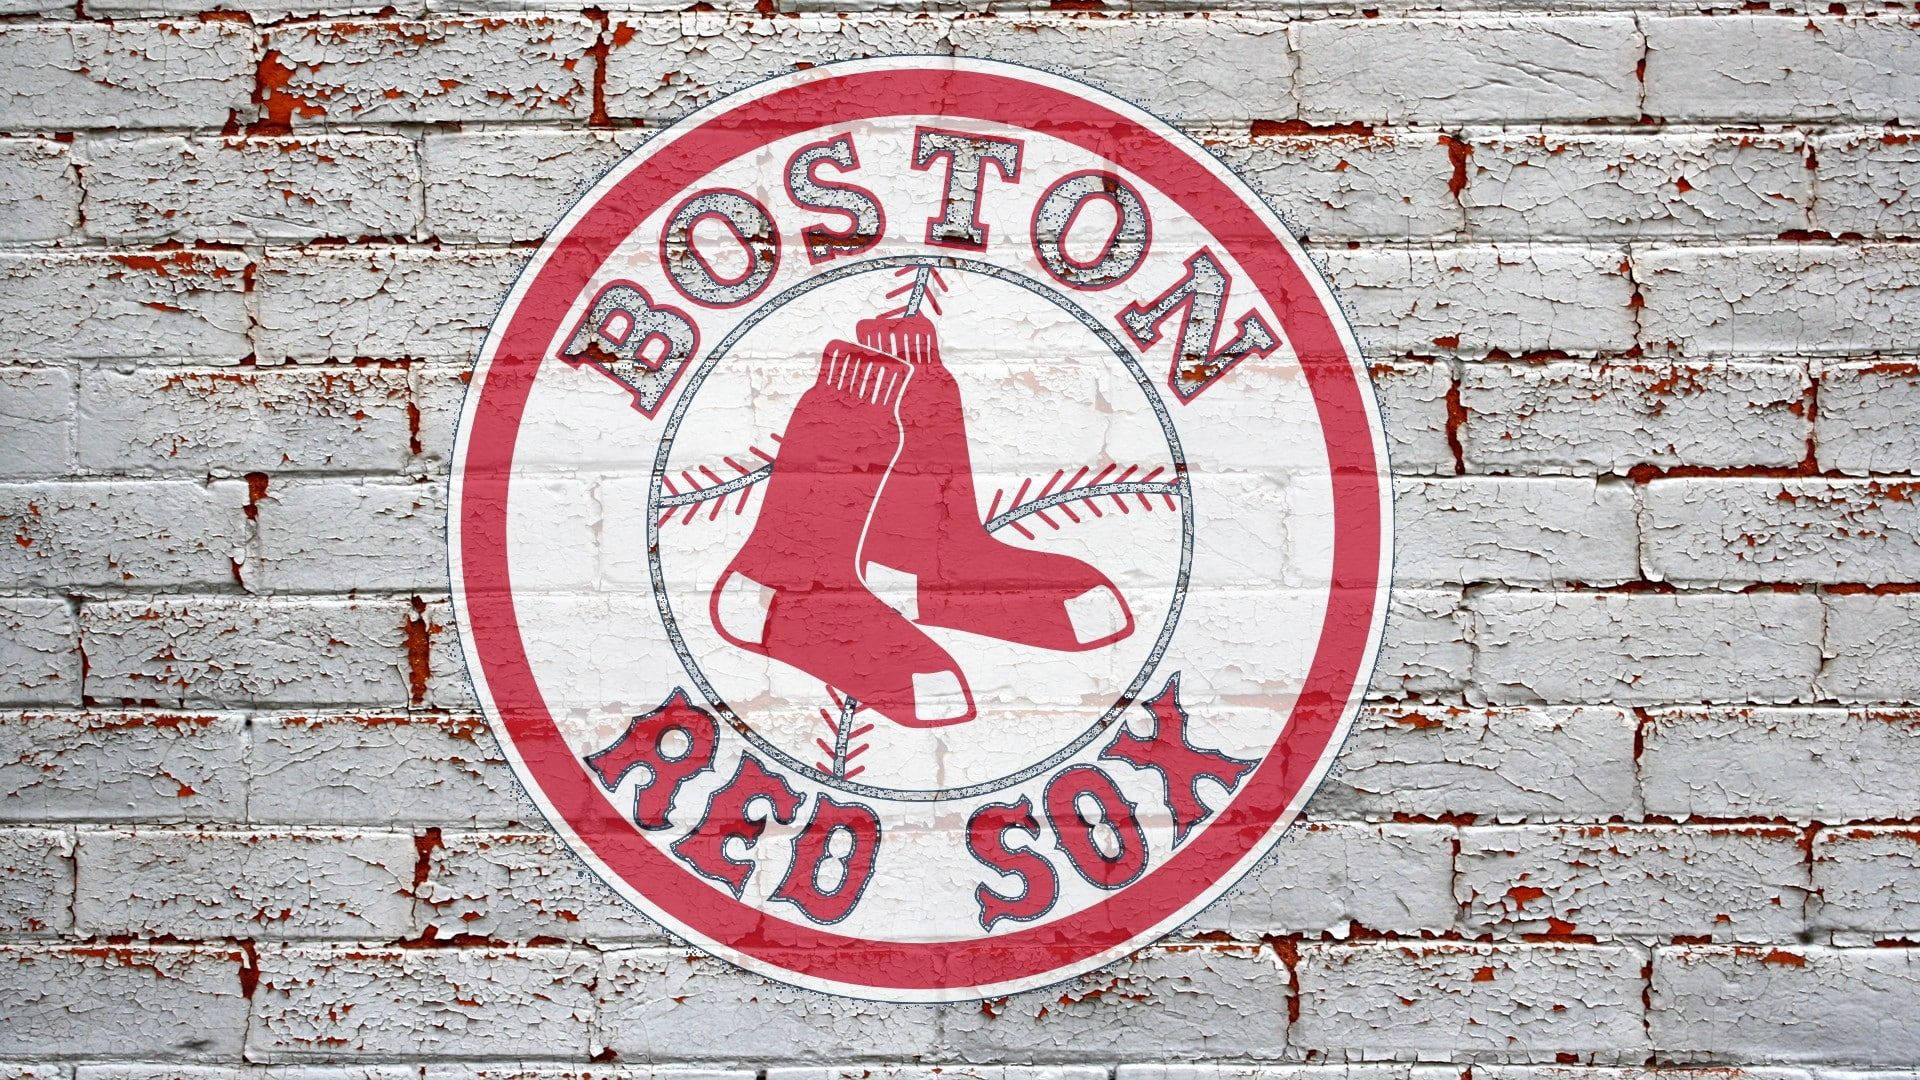 Boston Red Sox Brick Wall Background